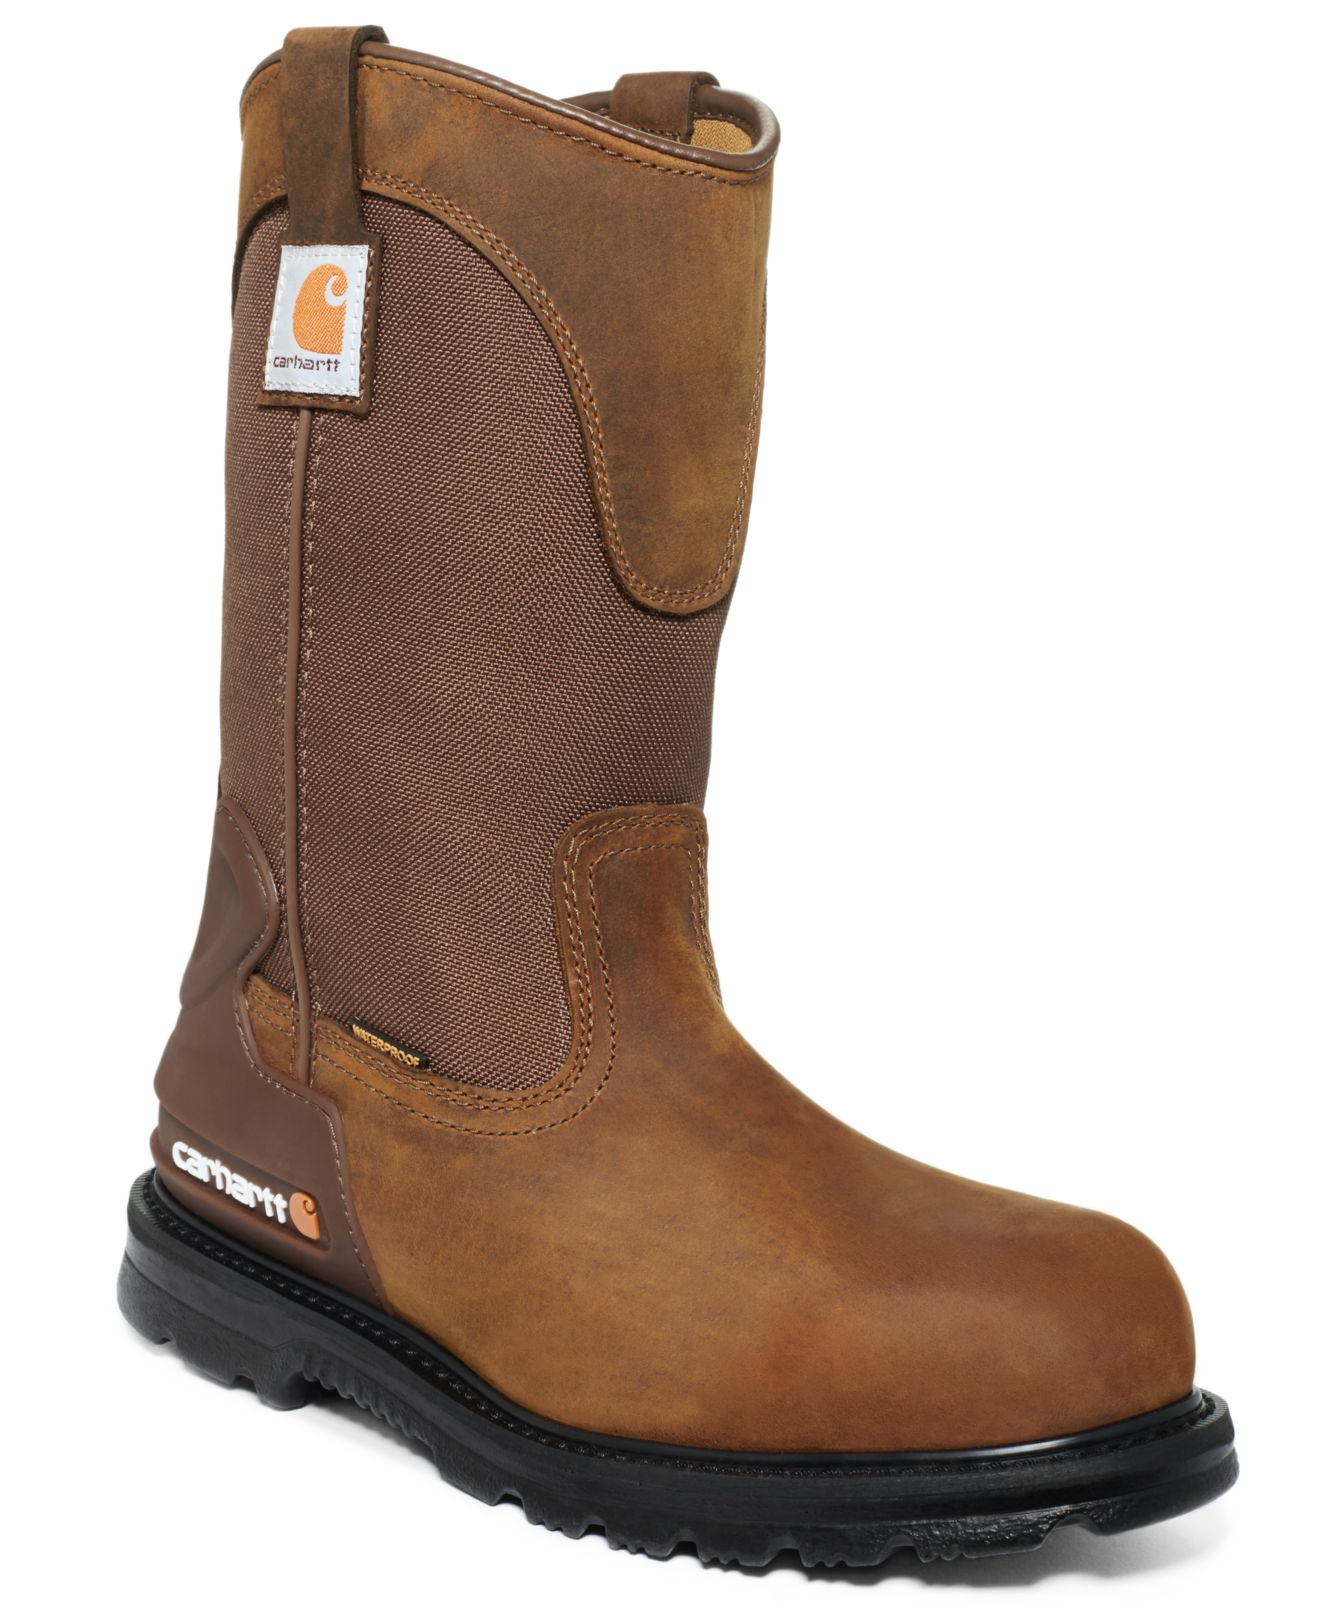 Lyst - Carhartt 11-Inch Bison Waterproof Steel Toe Work Boots in Brown ...